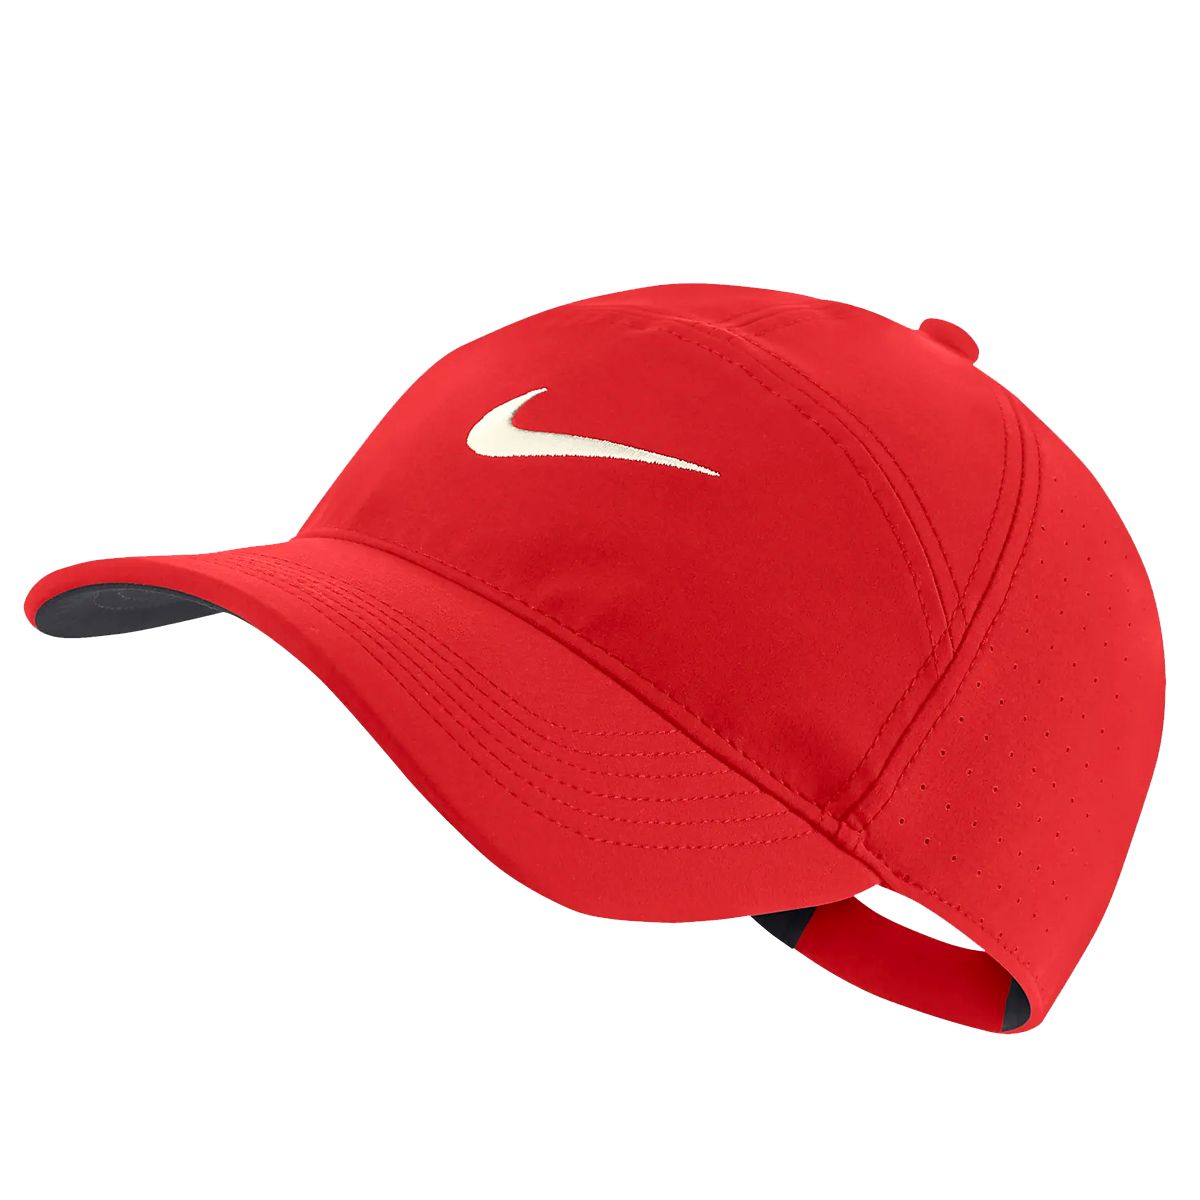 THE TRAINING CAP, Nike AeroBill Legacy91